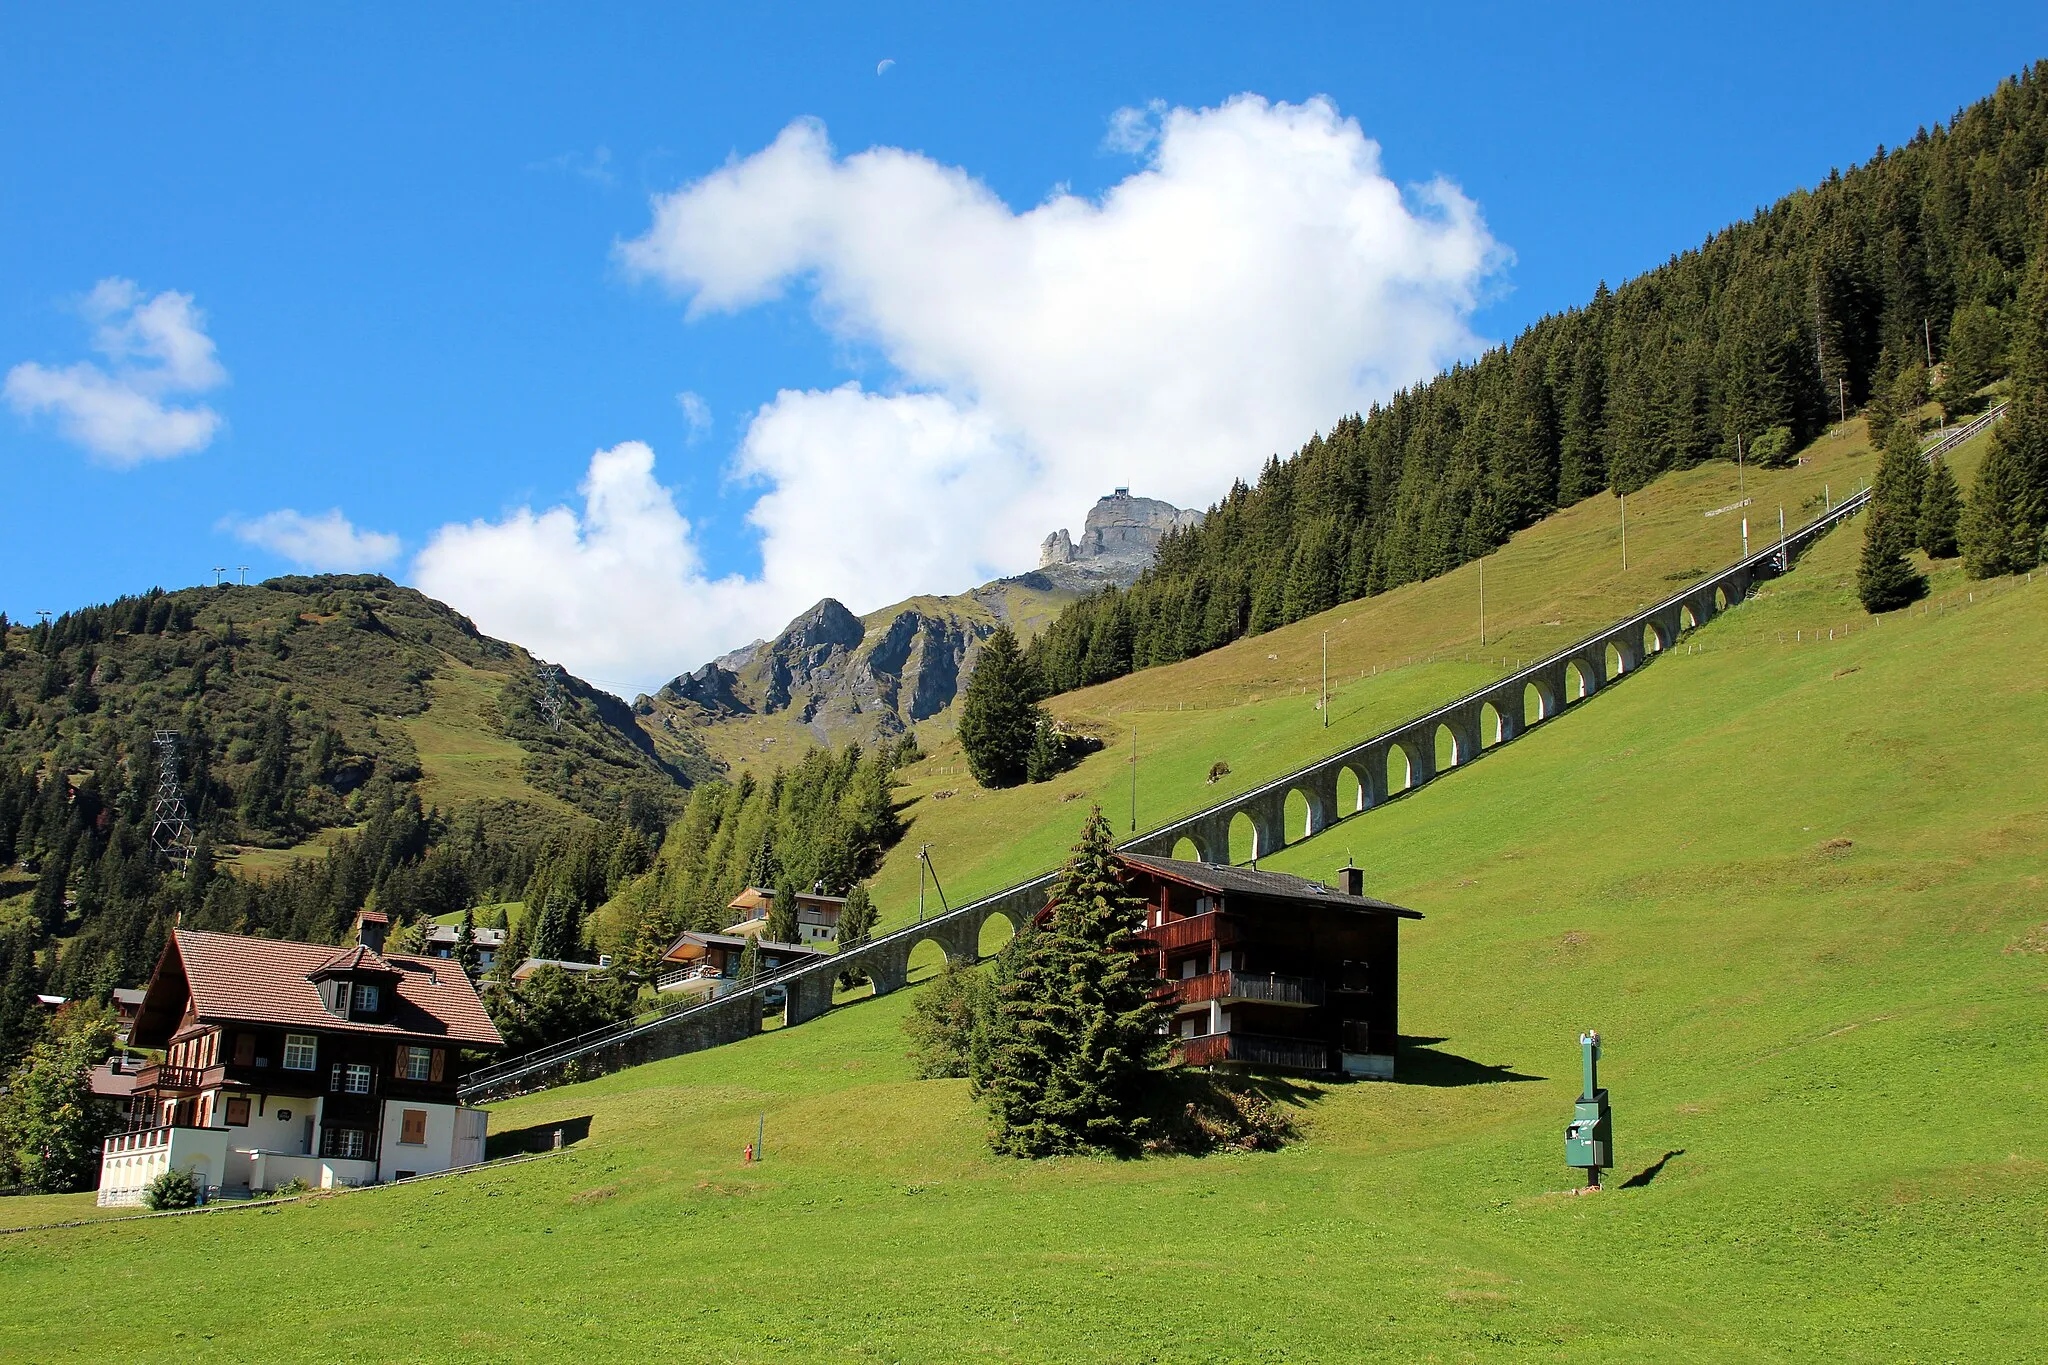 Photo showing: The Allmendhubelbahn funicular in Murren, Switzerland.